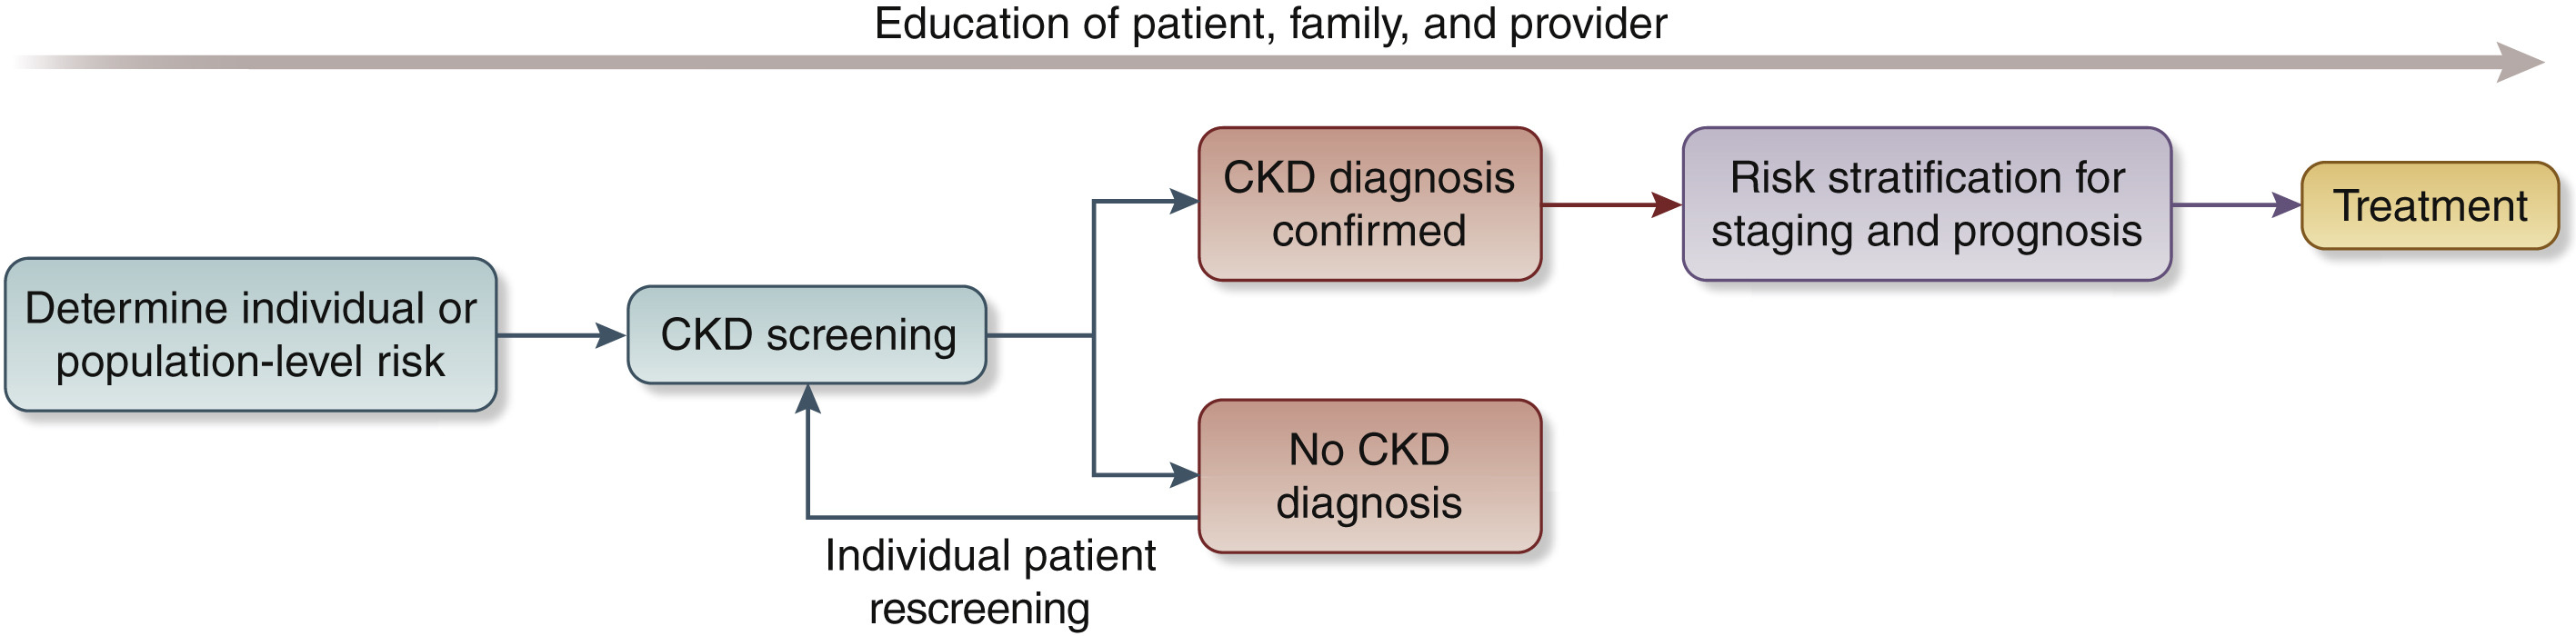 Conceptual framework of a chronic kidney disease (CKD) screening, risk stratification, and treatment program.